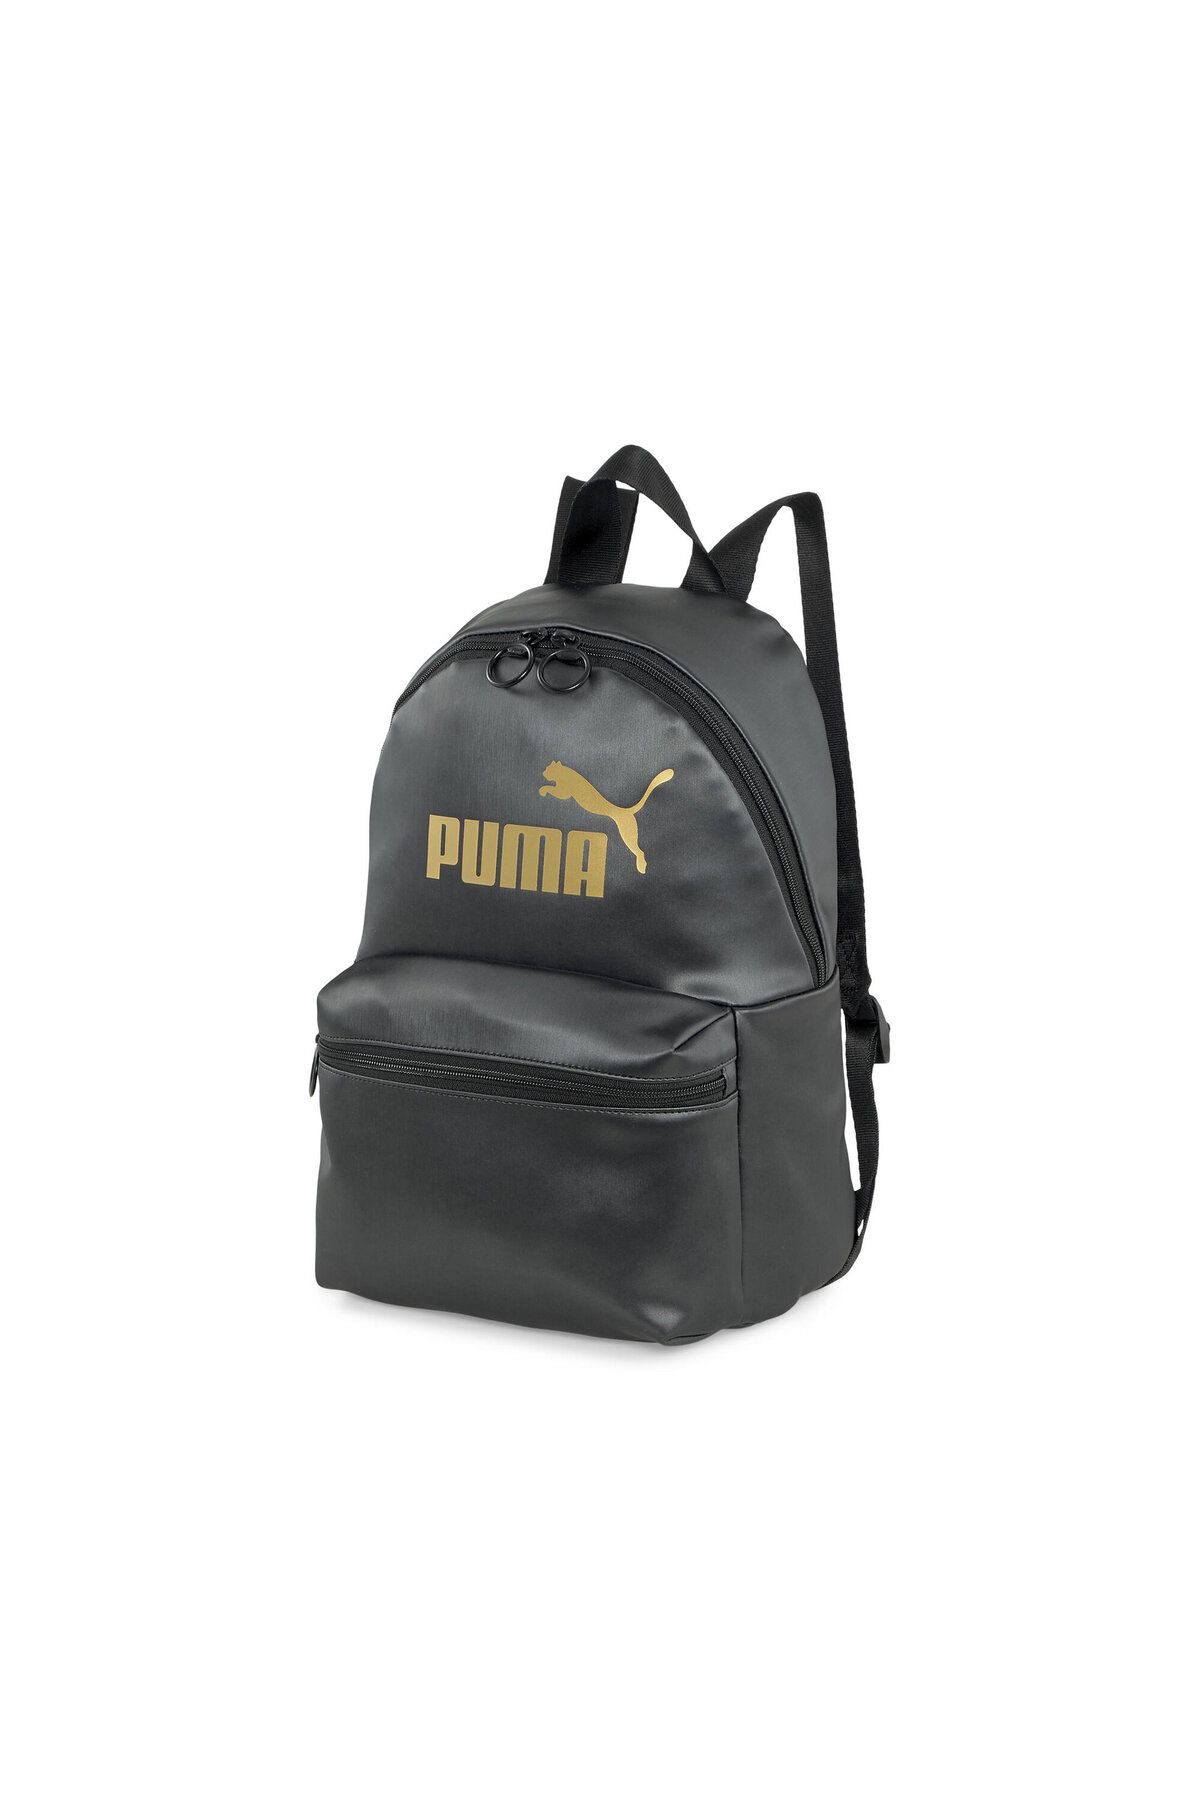 Puma Core Up Backpack Sırt Çantası 7947601 Siyah